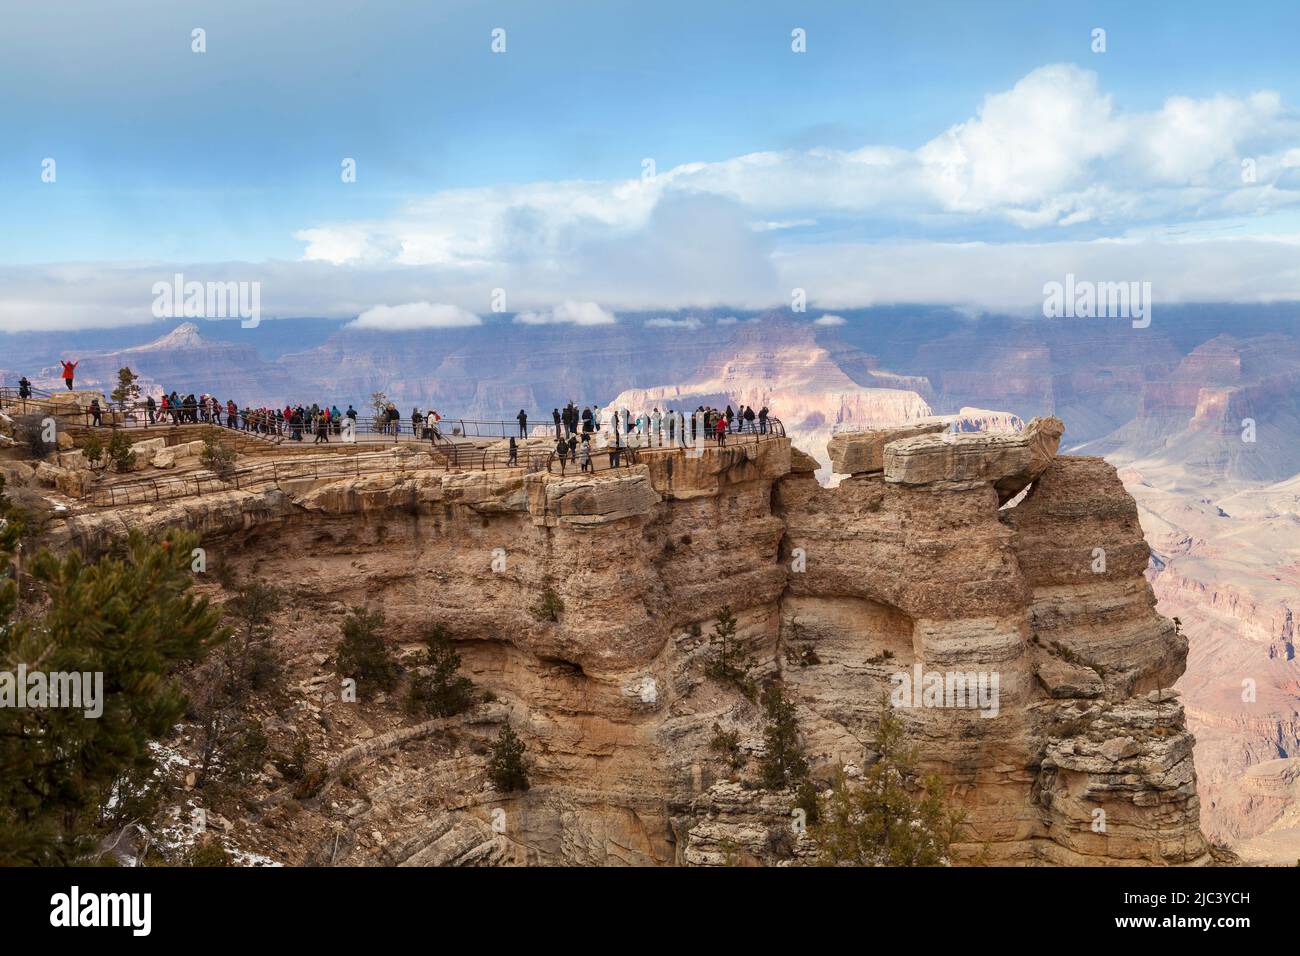 Turisti in visita a Mather Point, South RIM, Grand Canyon, Arizona, Stati Uniti Foto Stock